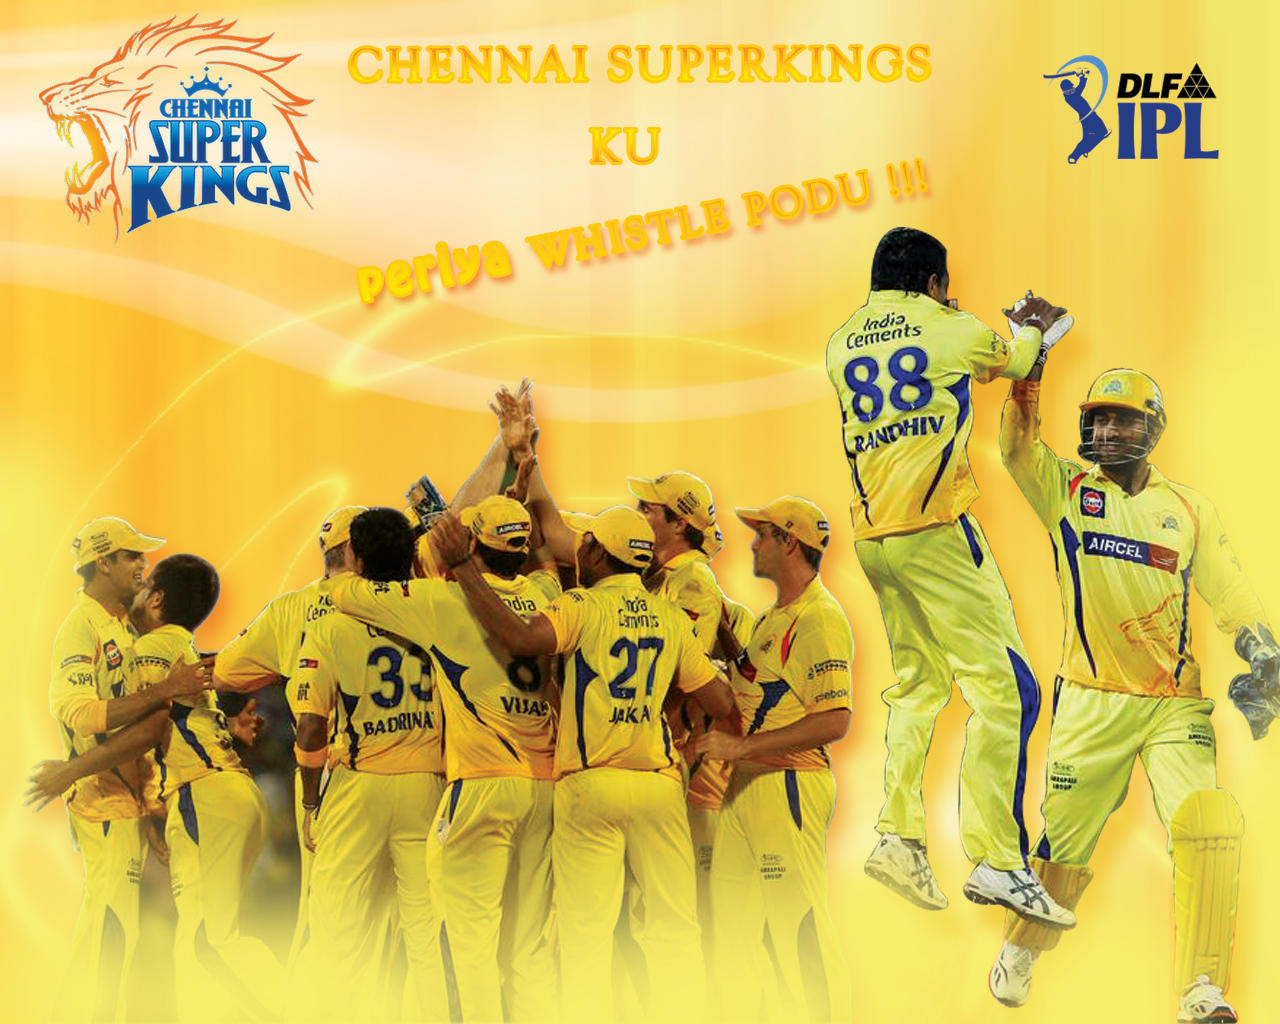 jayachandran: My Wallpaper Design For I.P.L Chennai Super Kings!!!!!!!!!